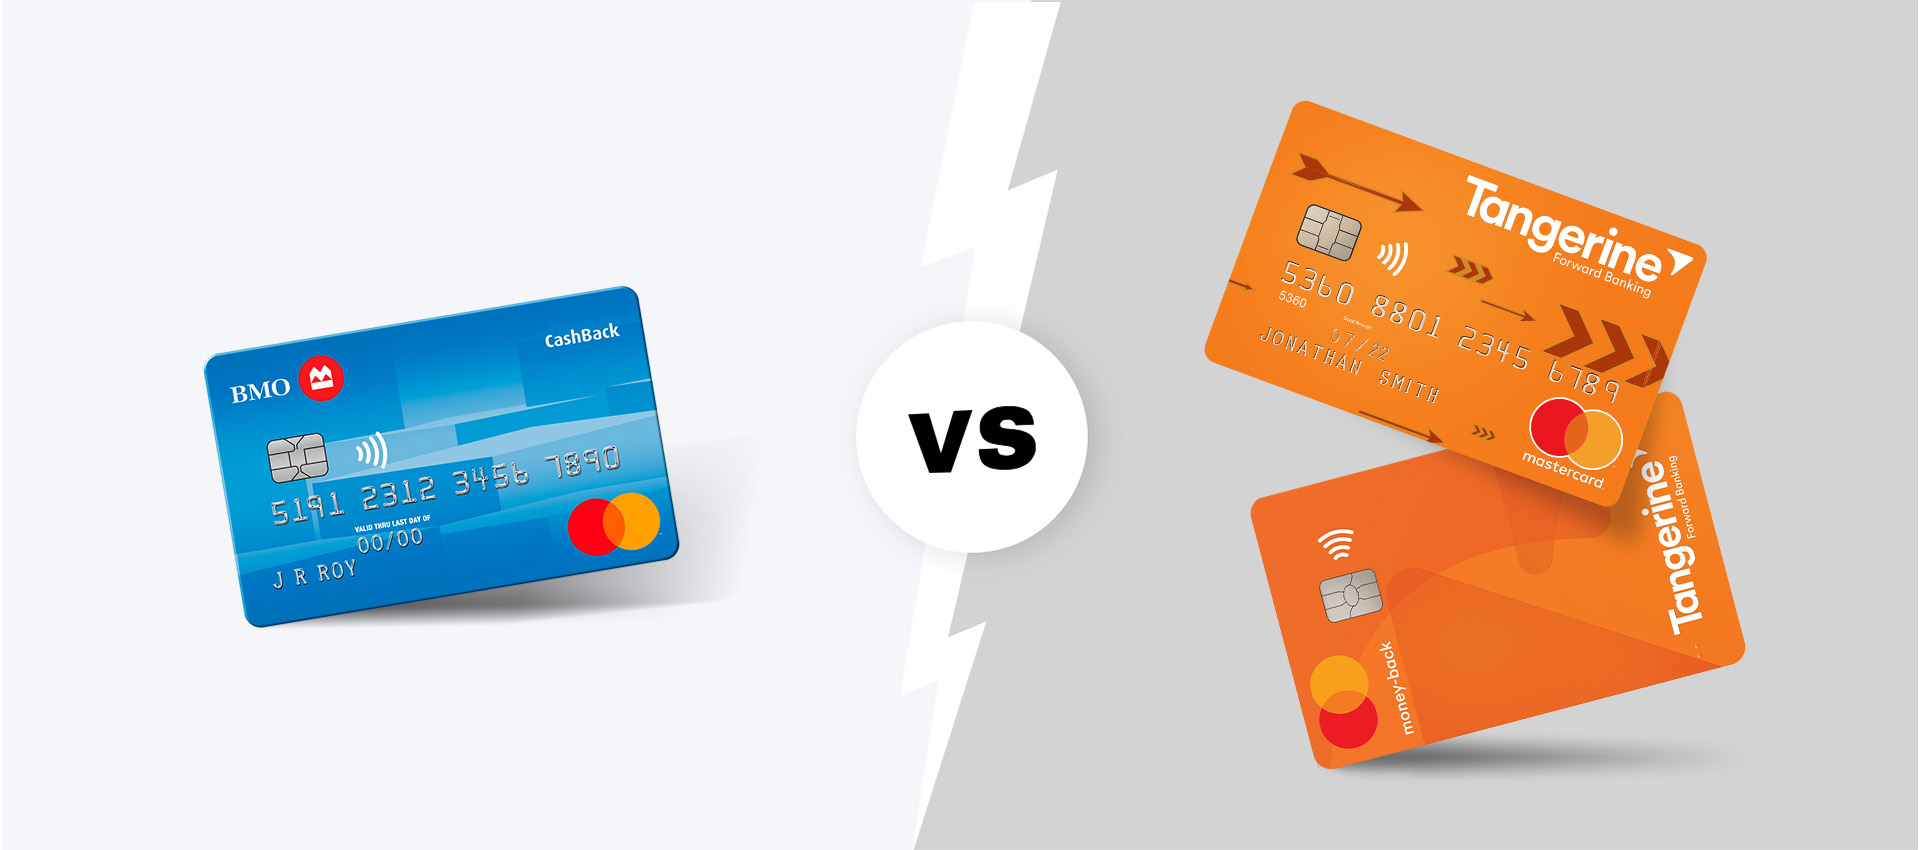 BMO cashback mastercard vs. tangerine cashback mastercard